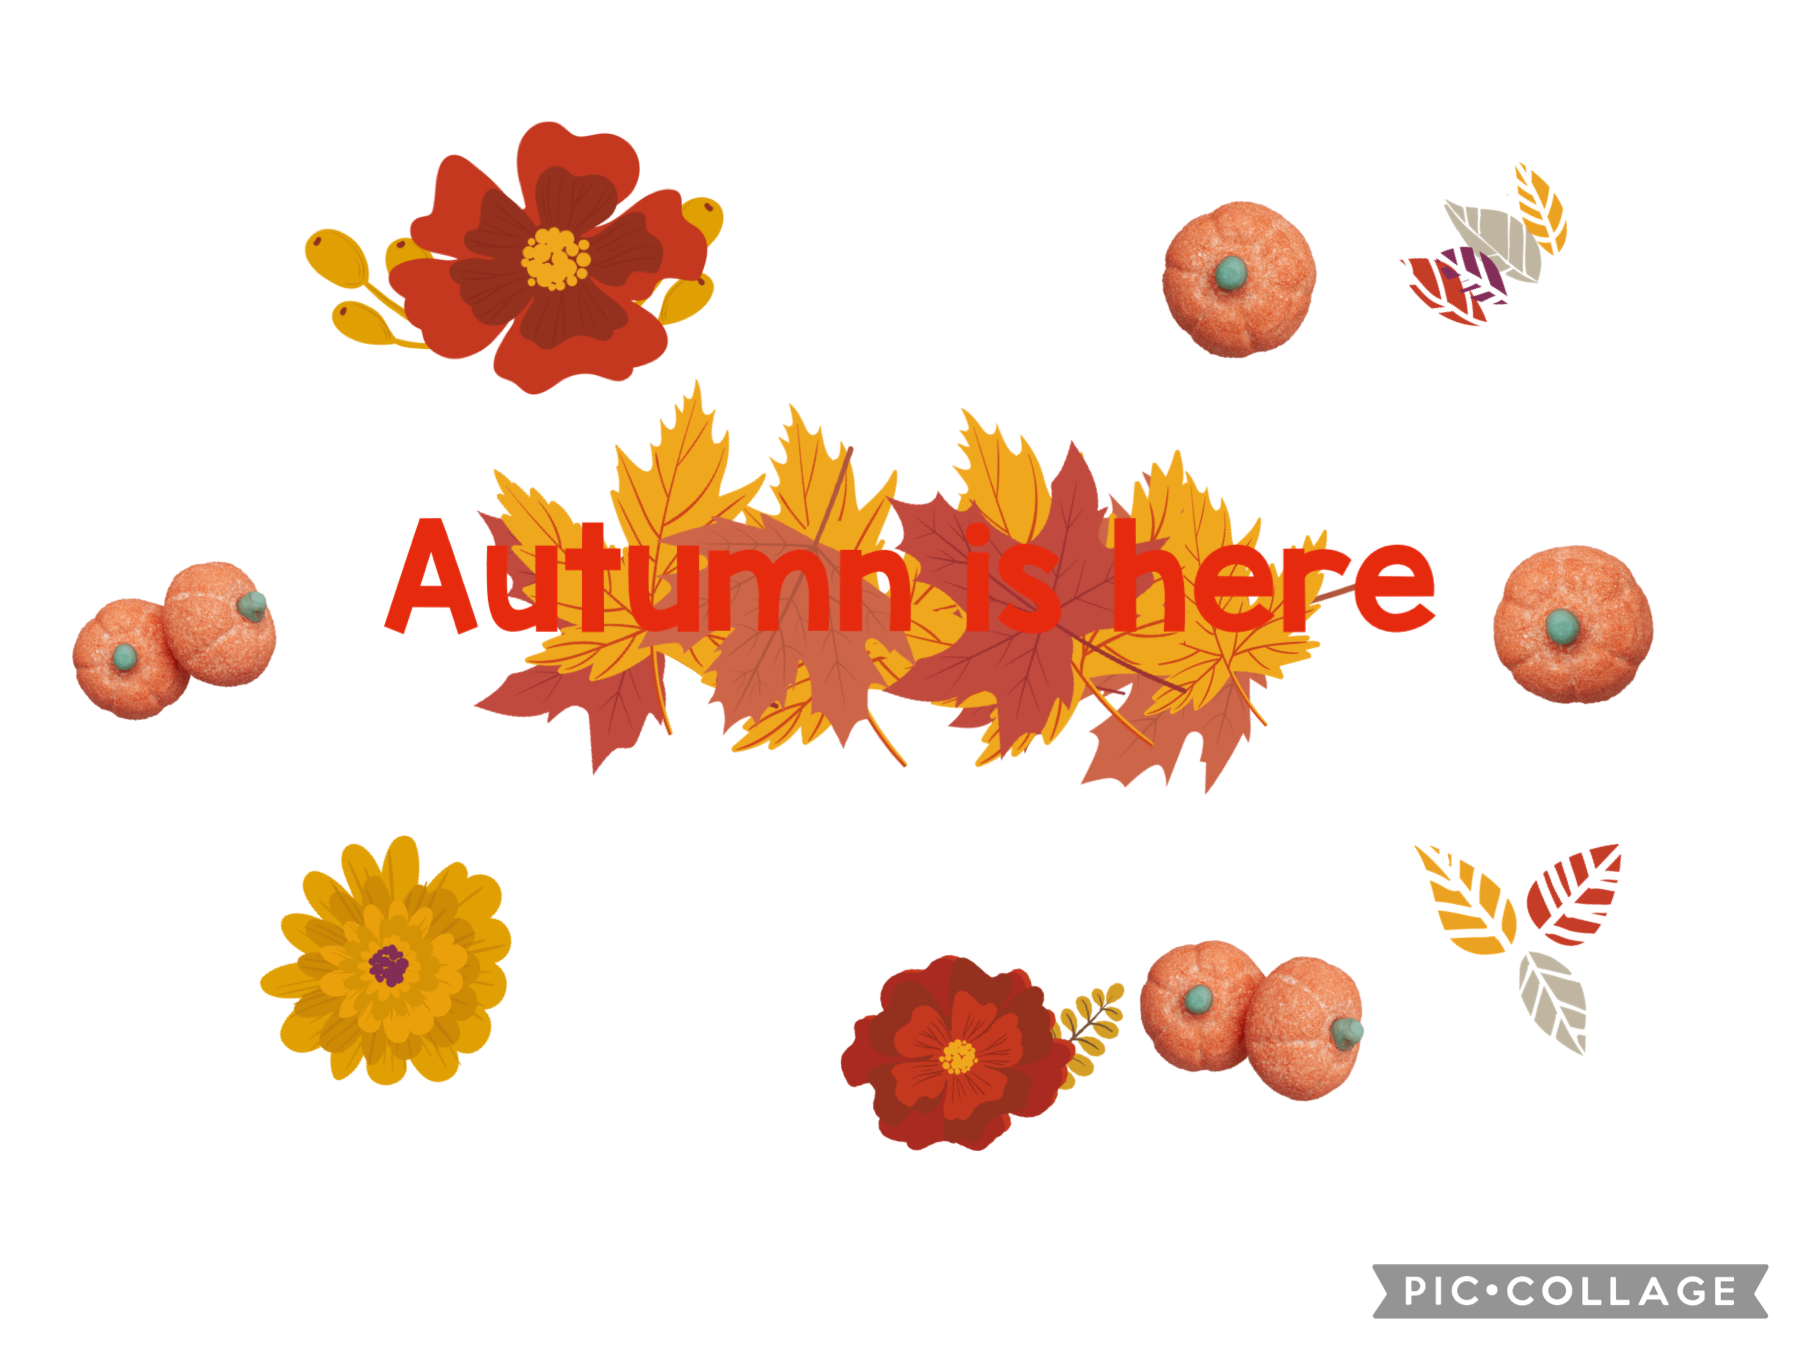 Autumn is here ! 3rd october 2021 🍂 Bonus 🍂